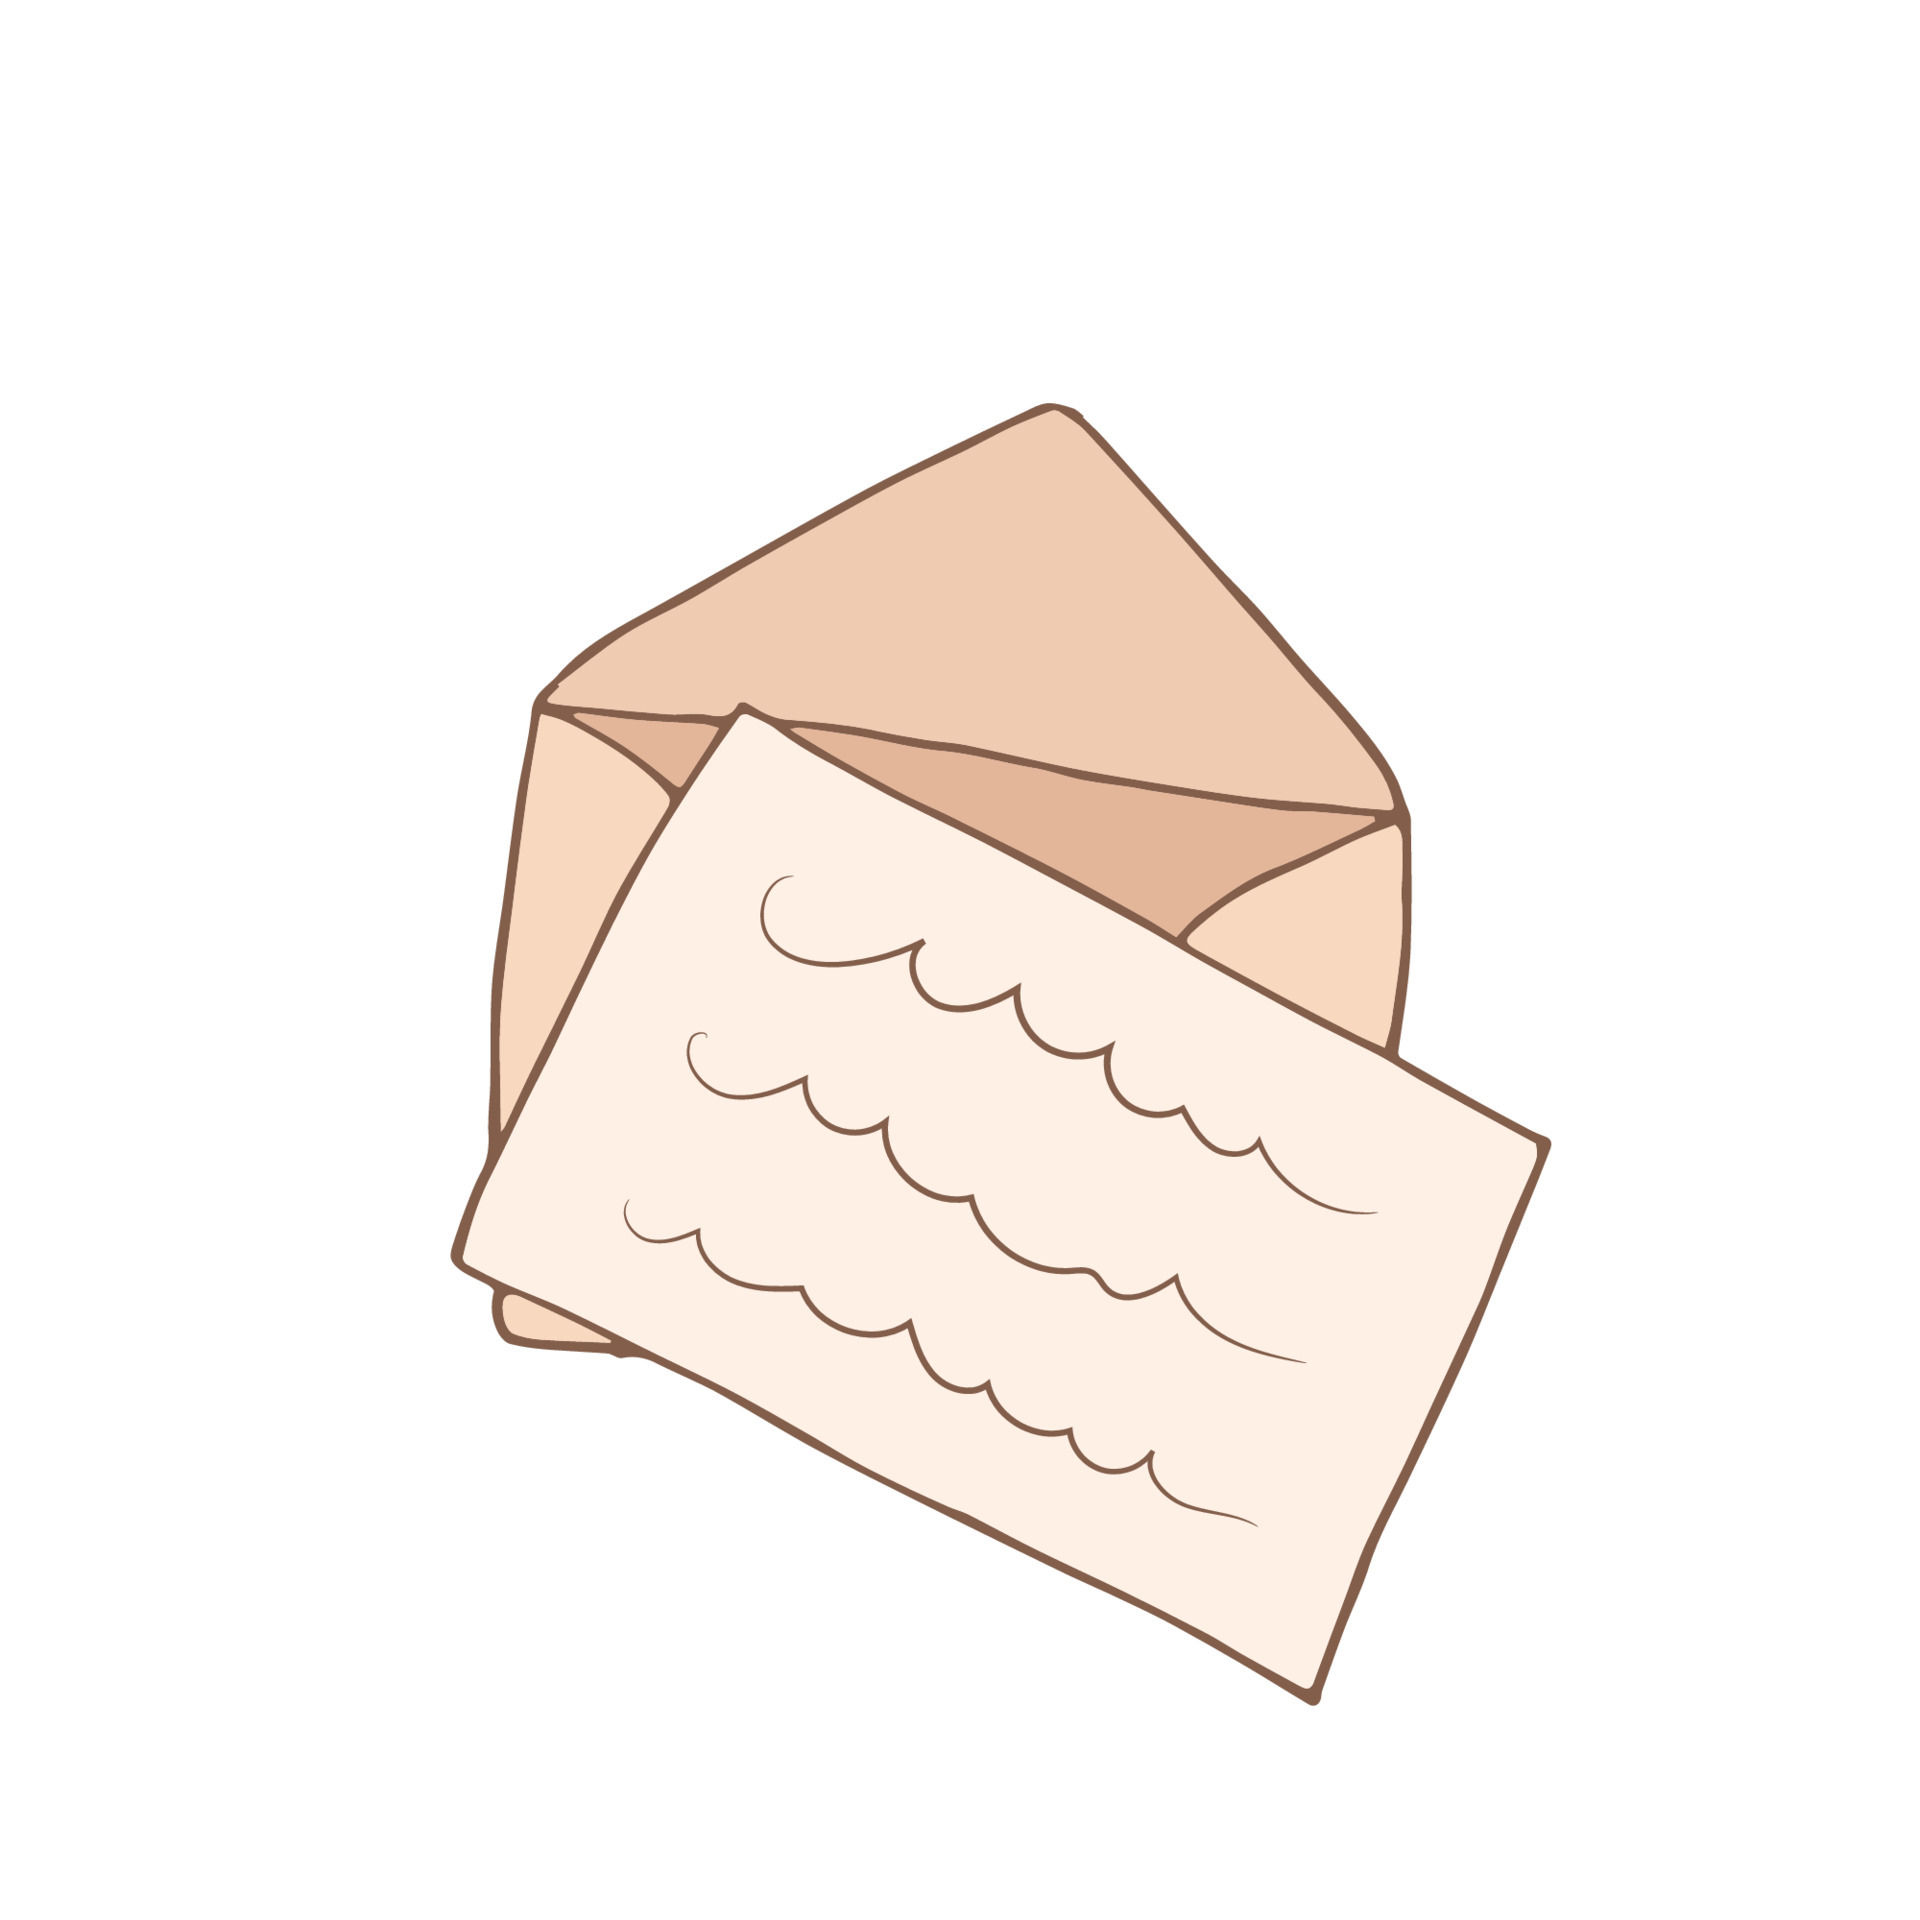 Open envelope doodle icon. Vector cartoon illustration with sketch